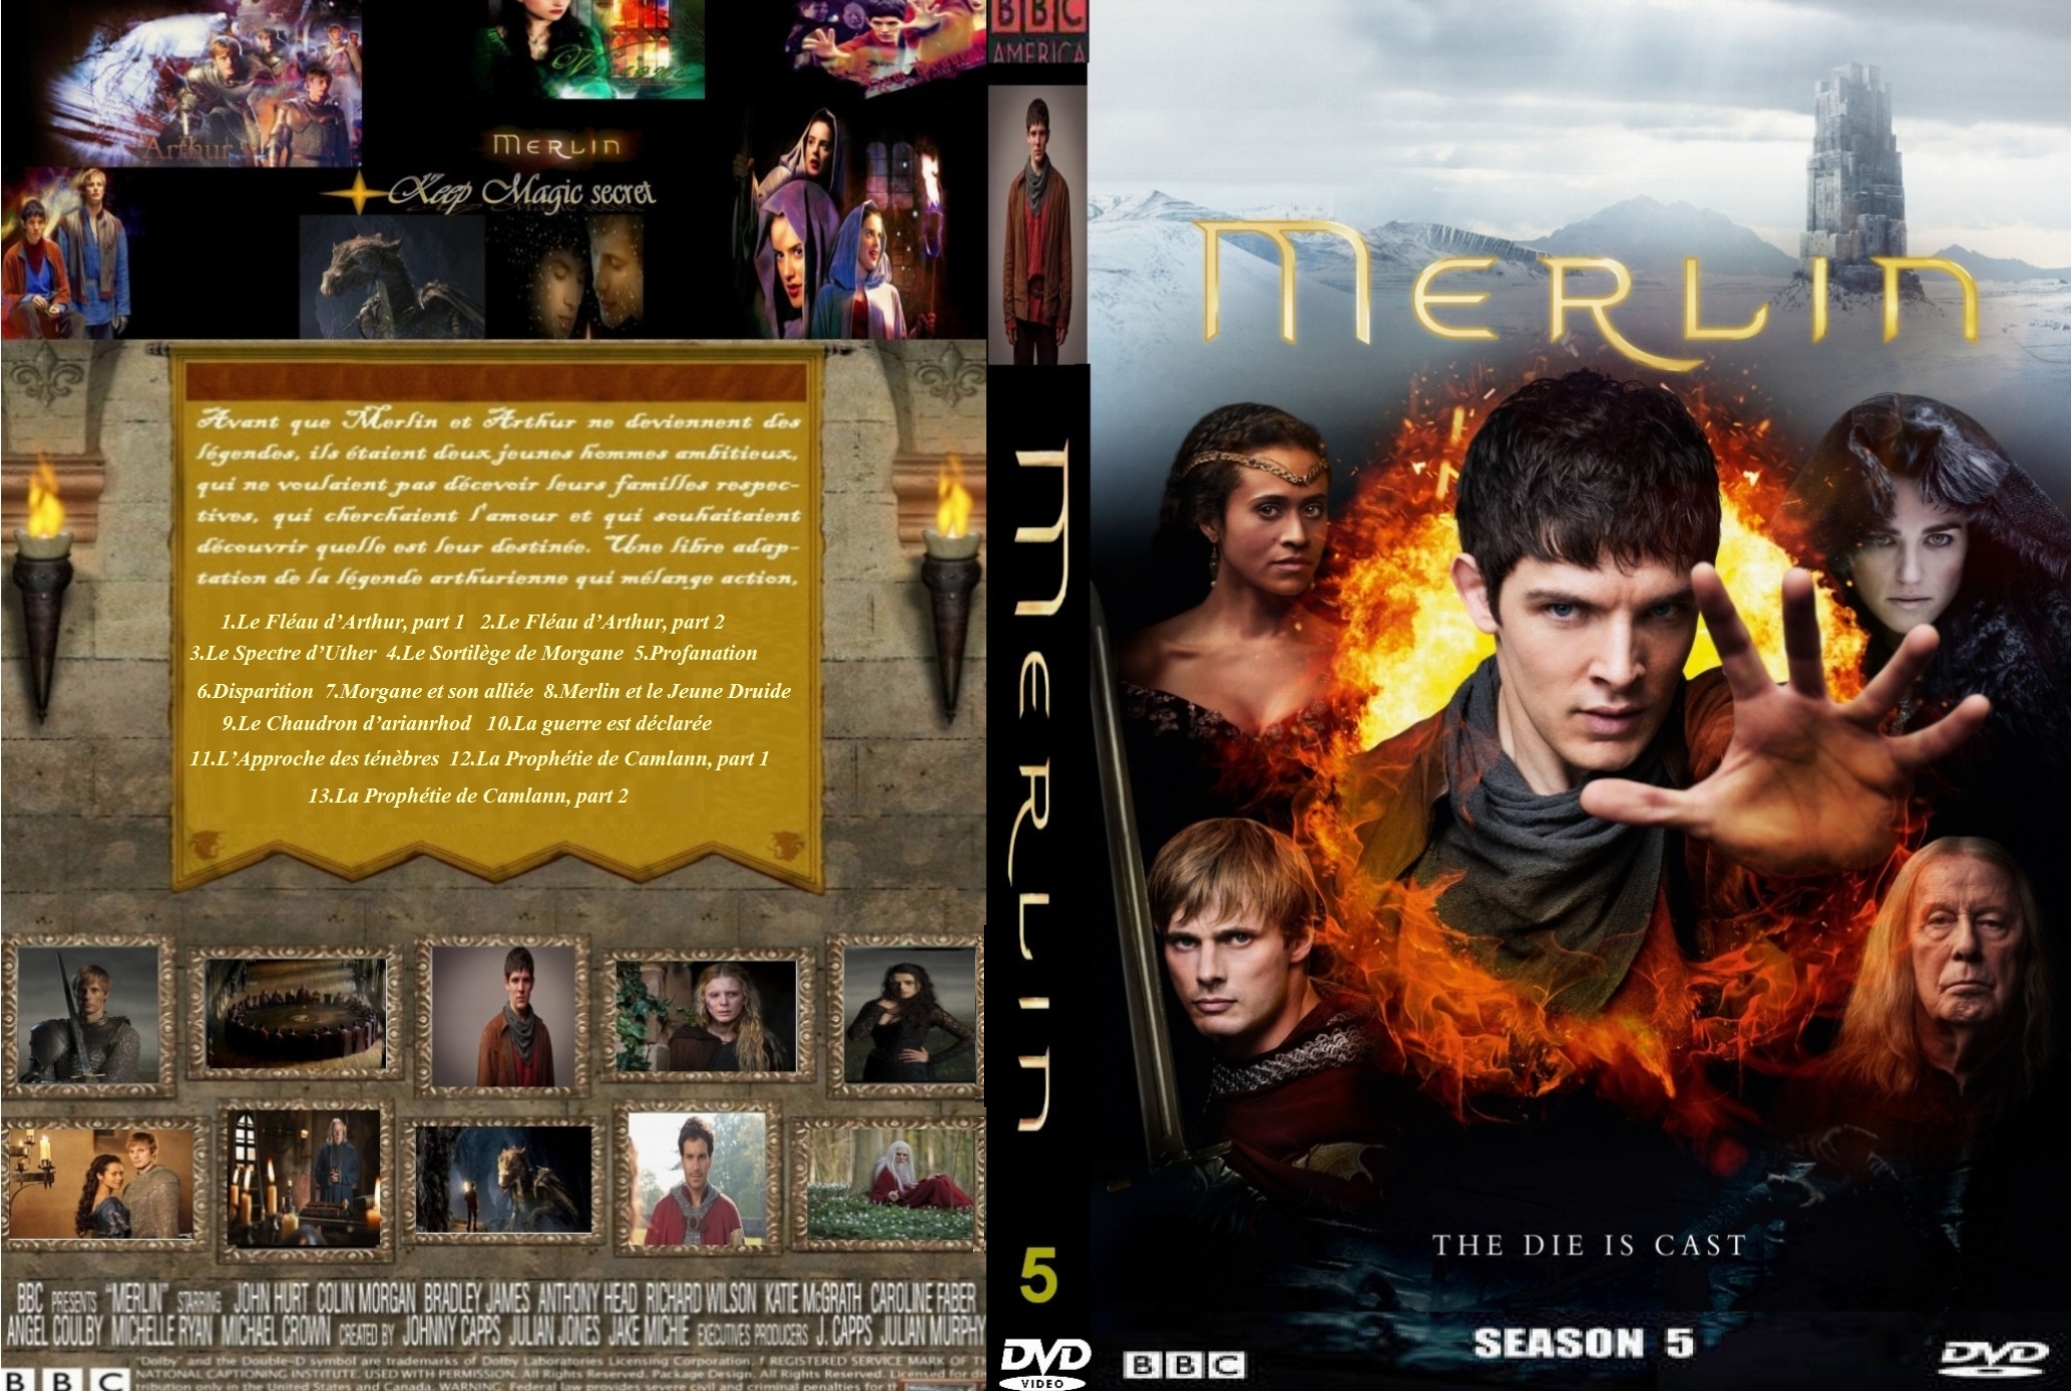 Jaquette DVD Merlin saison 5 custom